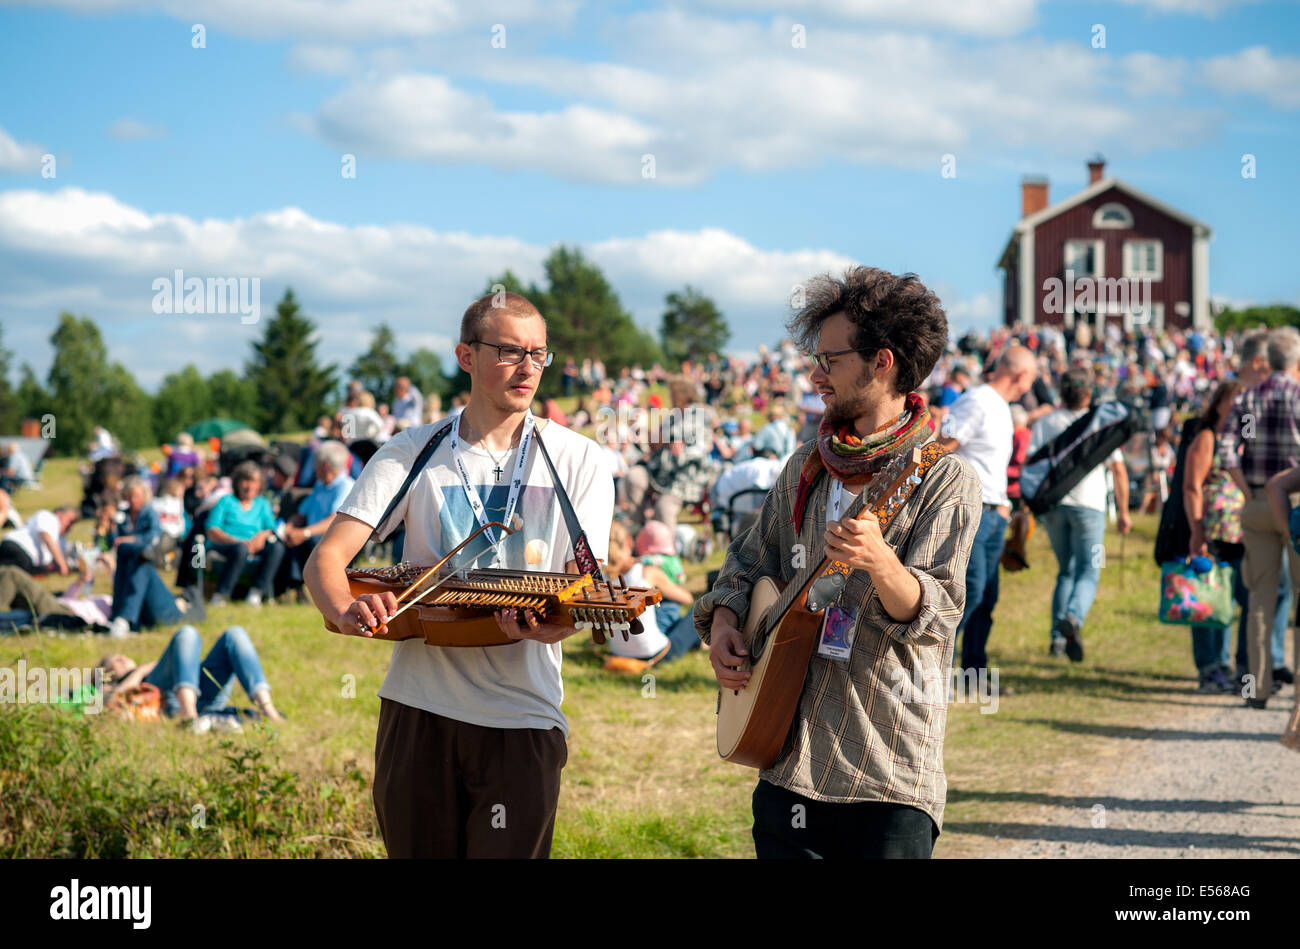 Zwei Musiker auf die berühmte traditionelle Volksmusikfestival in Bingsjo, Schweden. Stockfoto